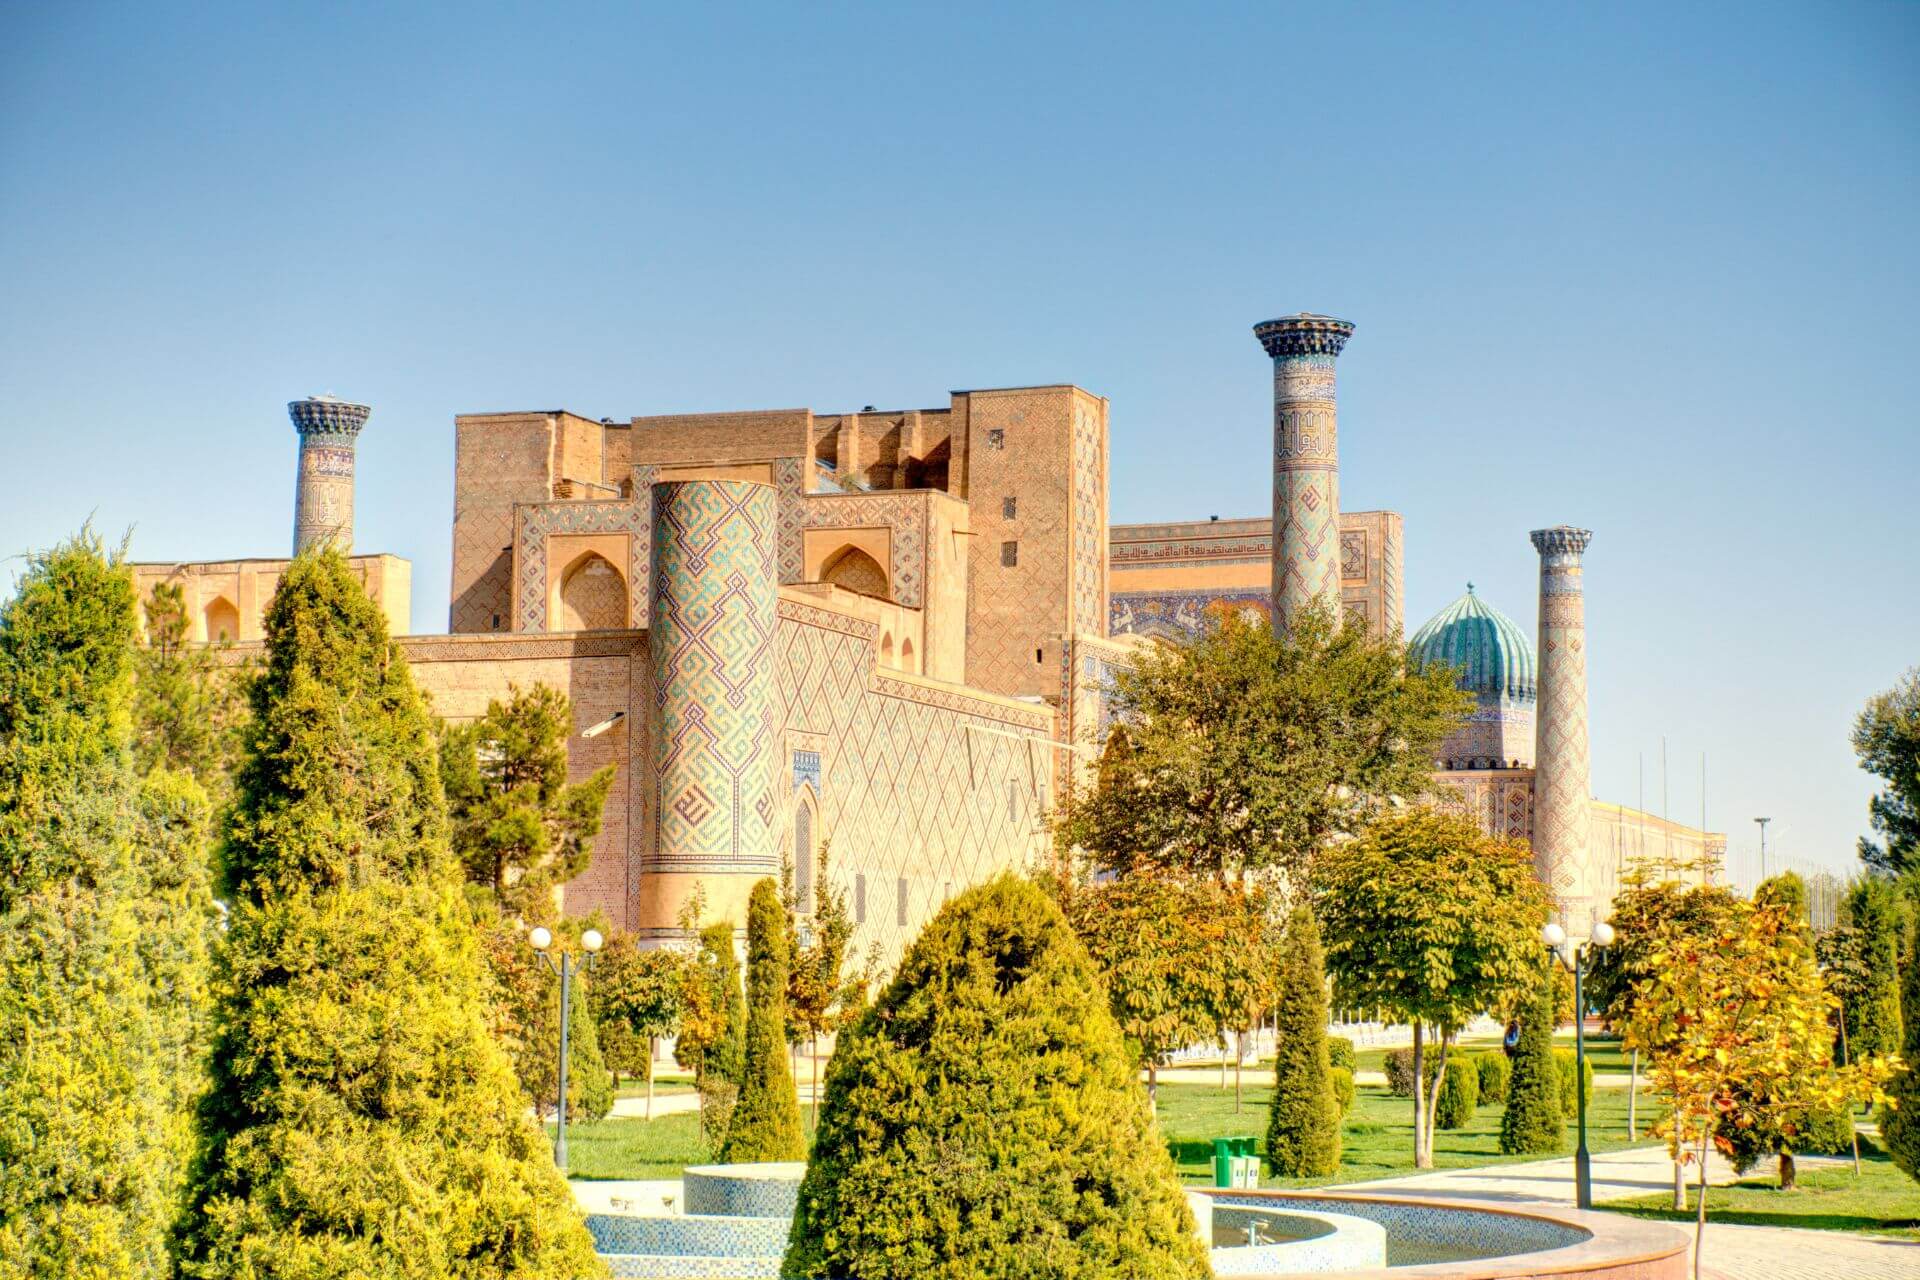 Captivating Classic Tour around Uzbekistan